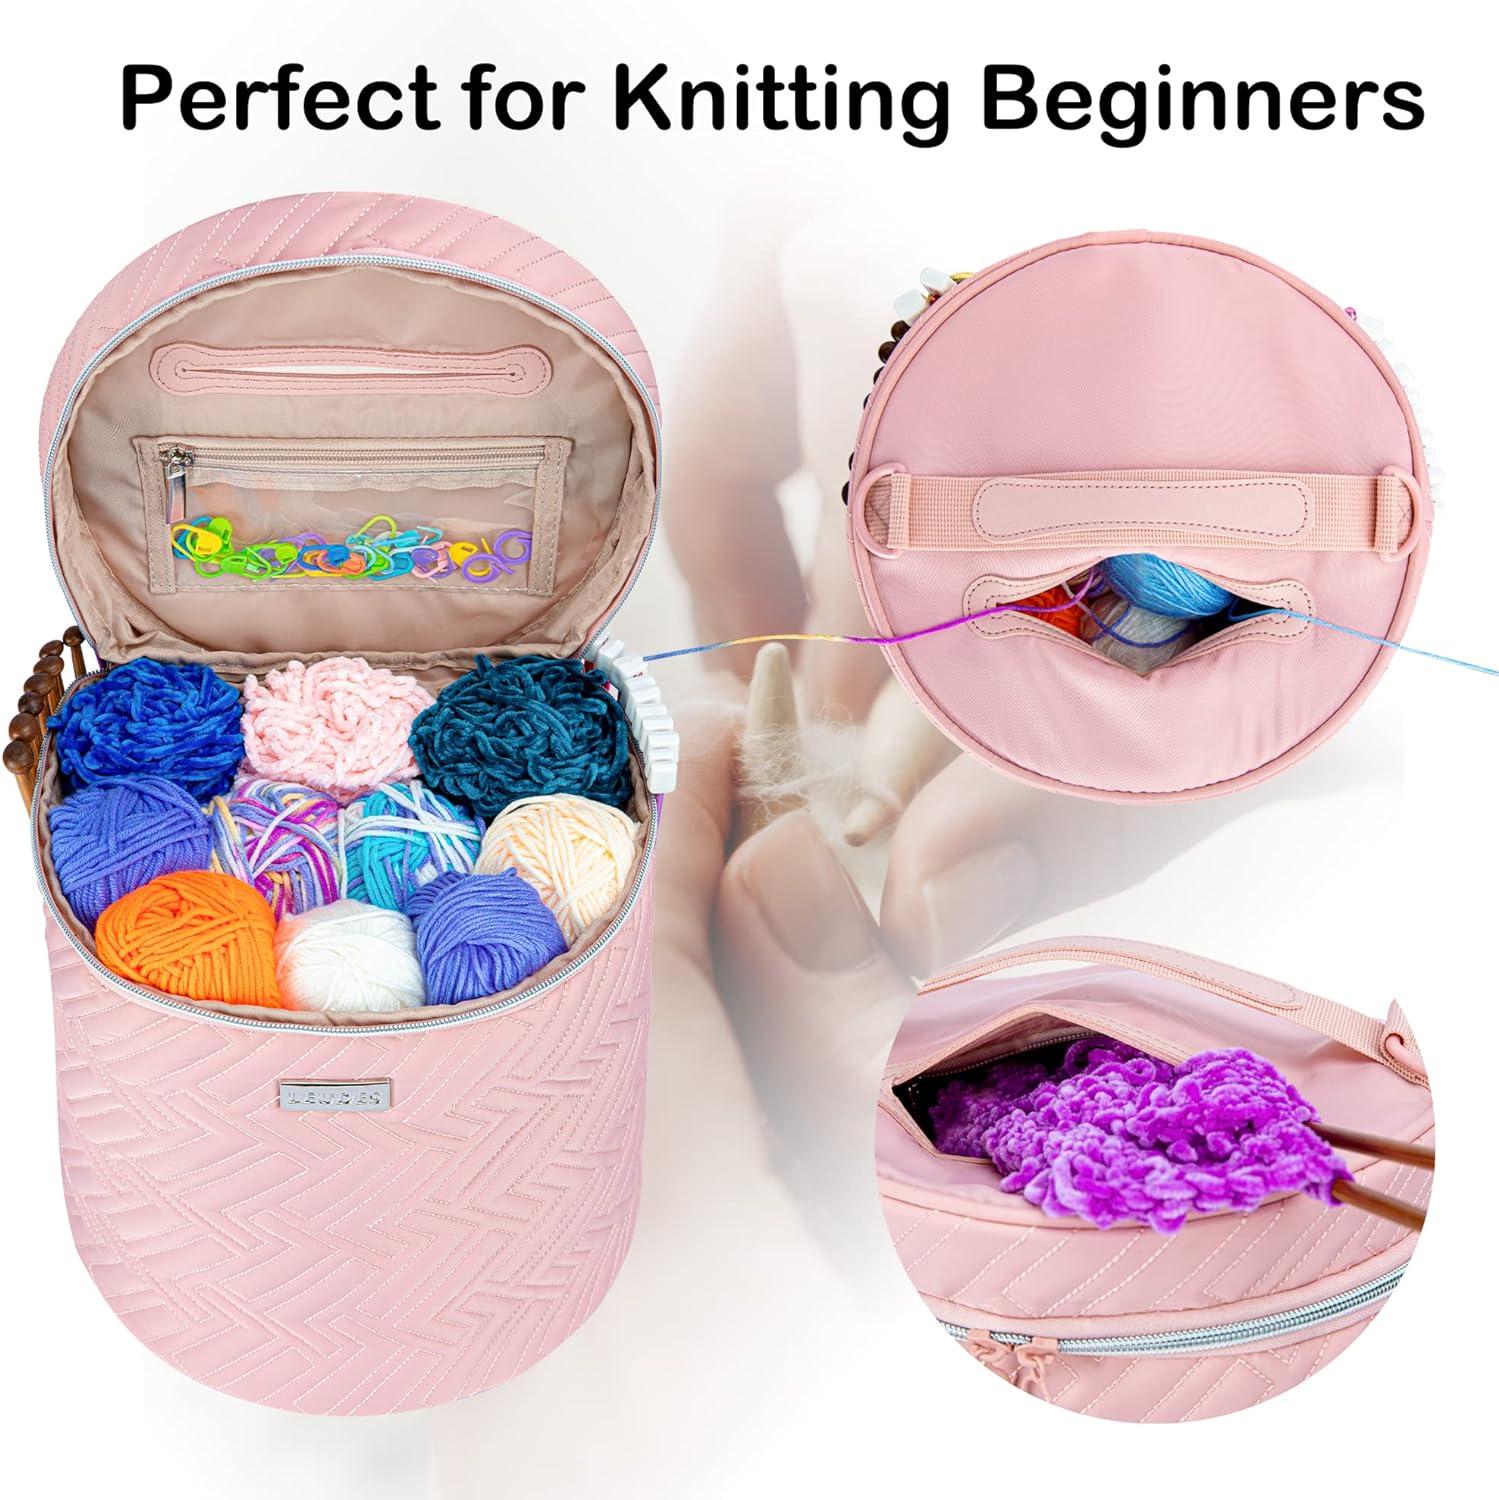 Yarn Bag Leudes Crochet Tote Knitting Bag Water Resistant Yarn Storage  Organizer Holder Case for Crochet Hooks Needles Knitting Kit for Beginners  (Pink)